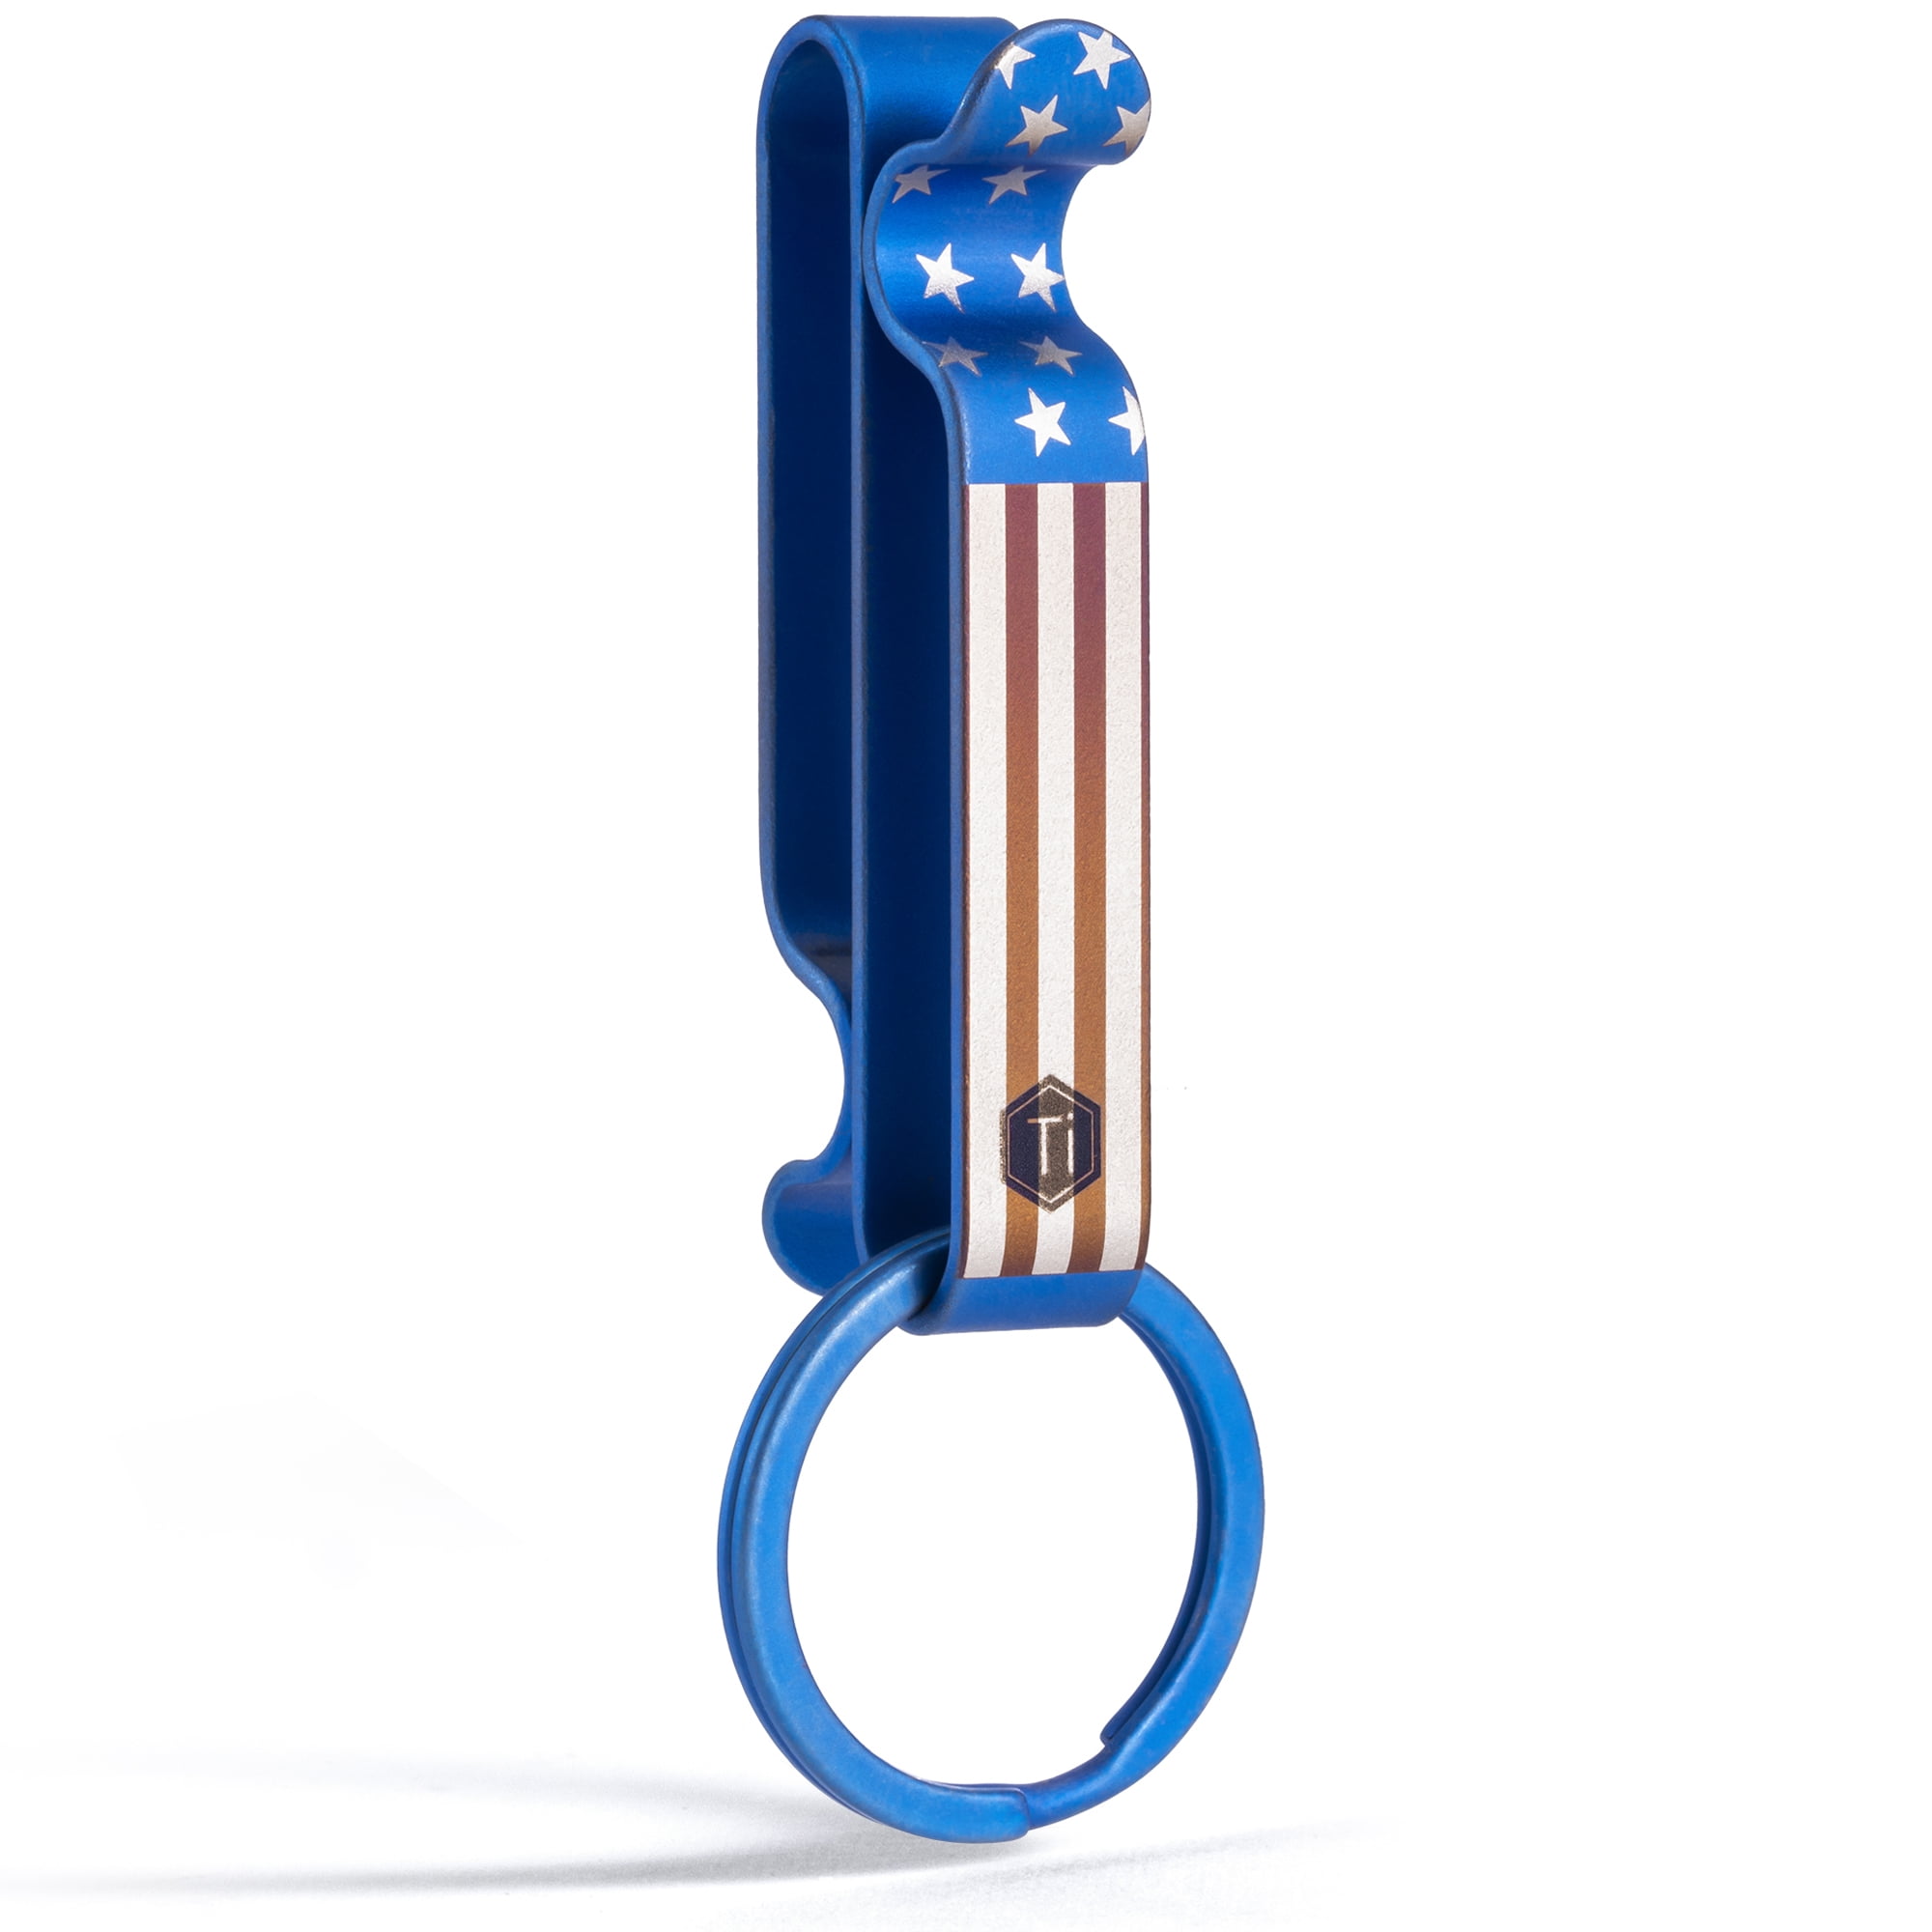 KeyUnity Keychain Clip for Belt, KS02 Stainless Steel Belt Loop Keychain,  Gifts for Men Dad, Gray 